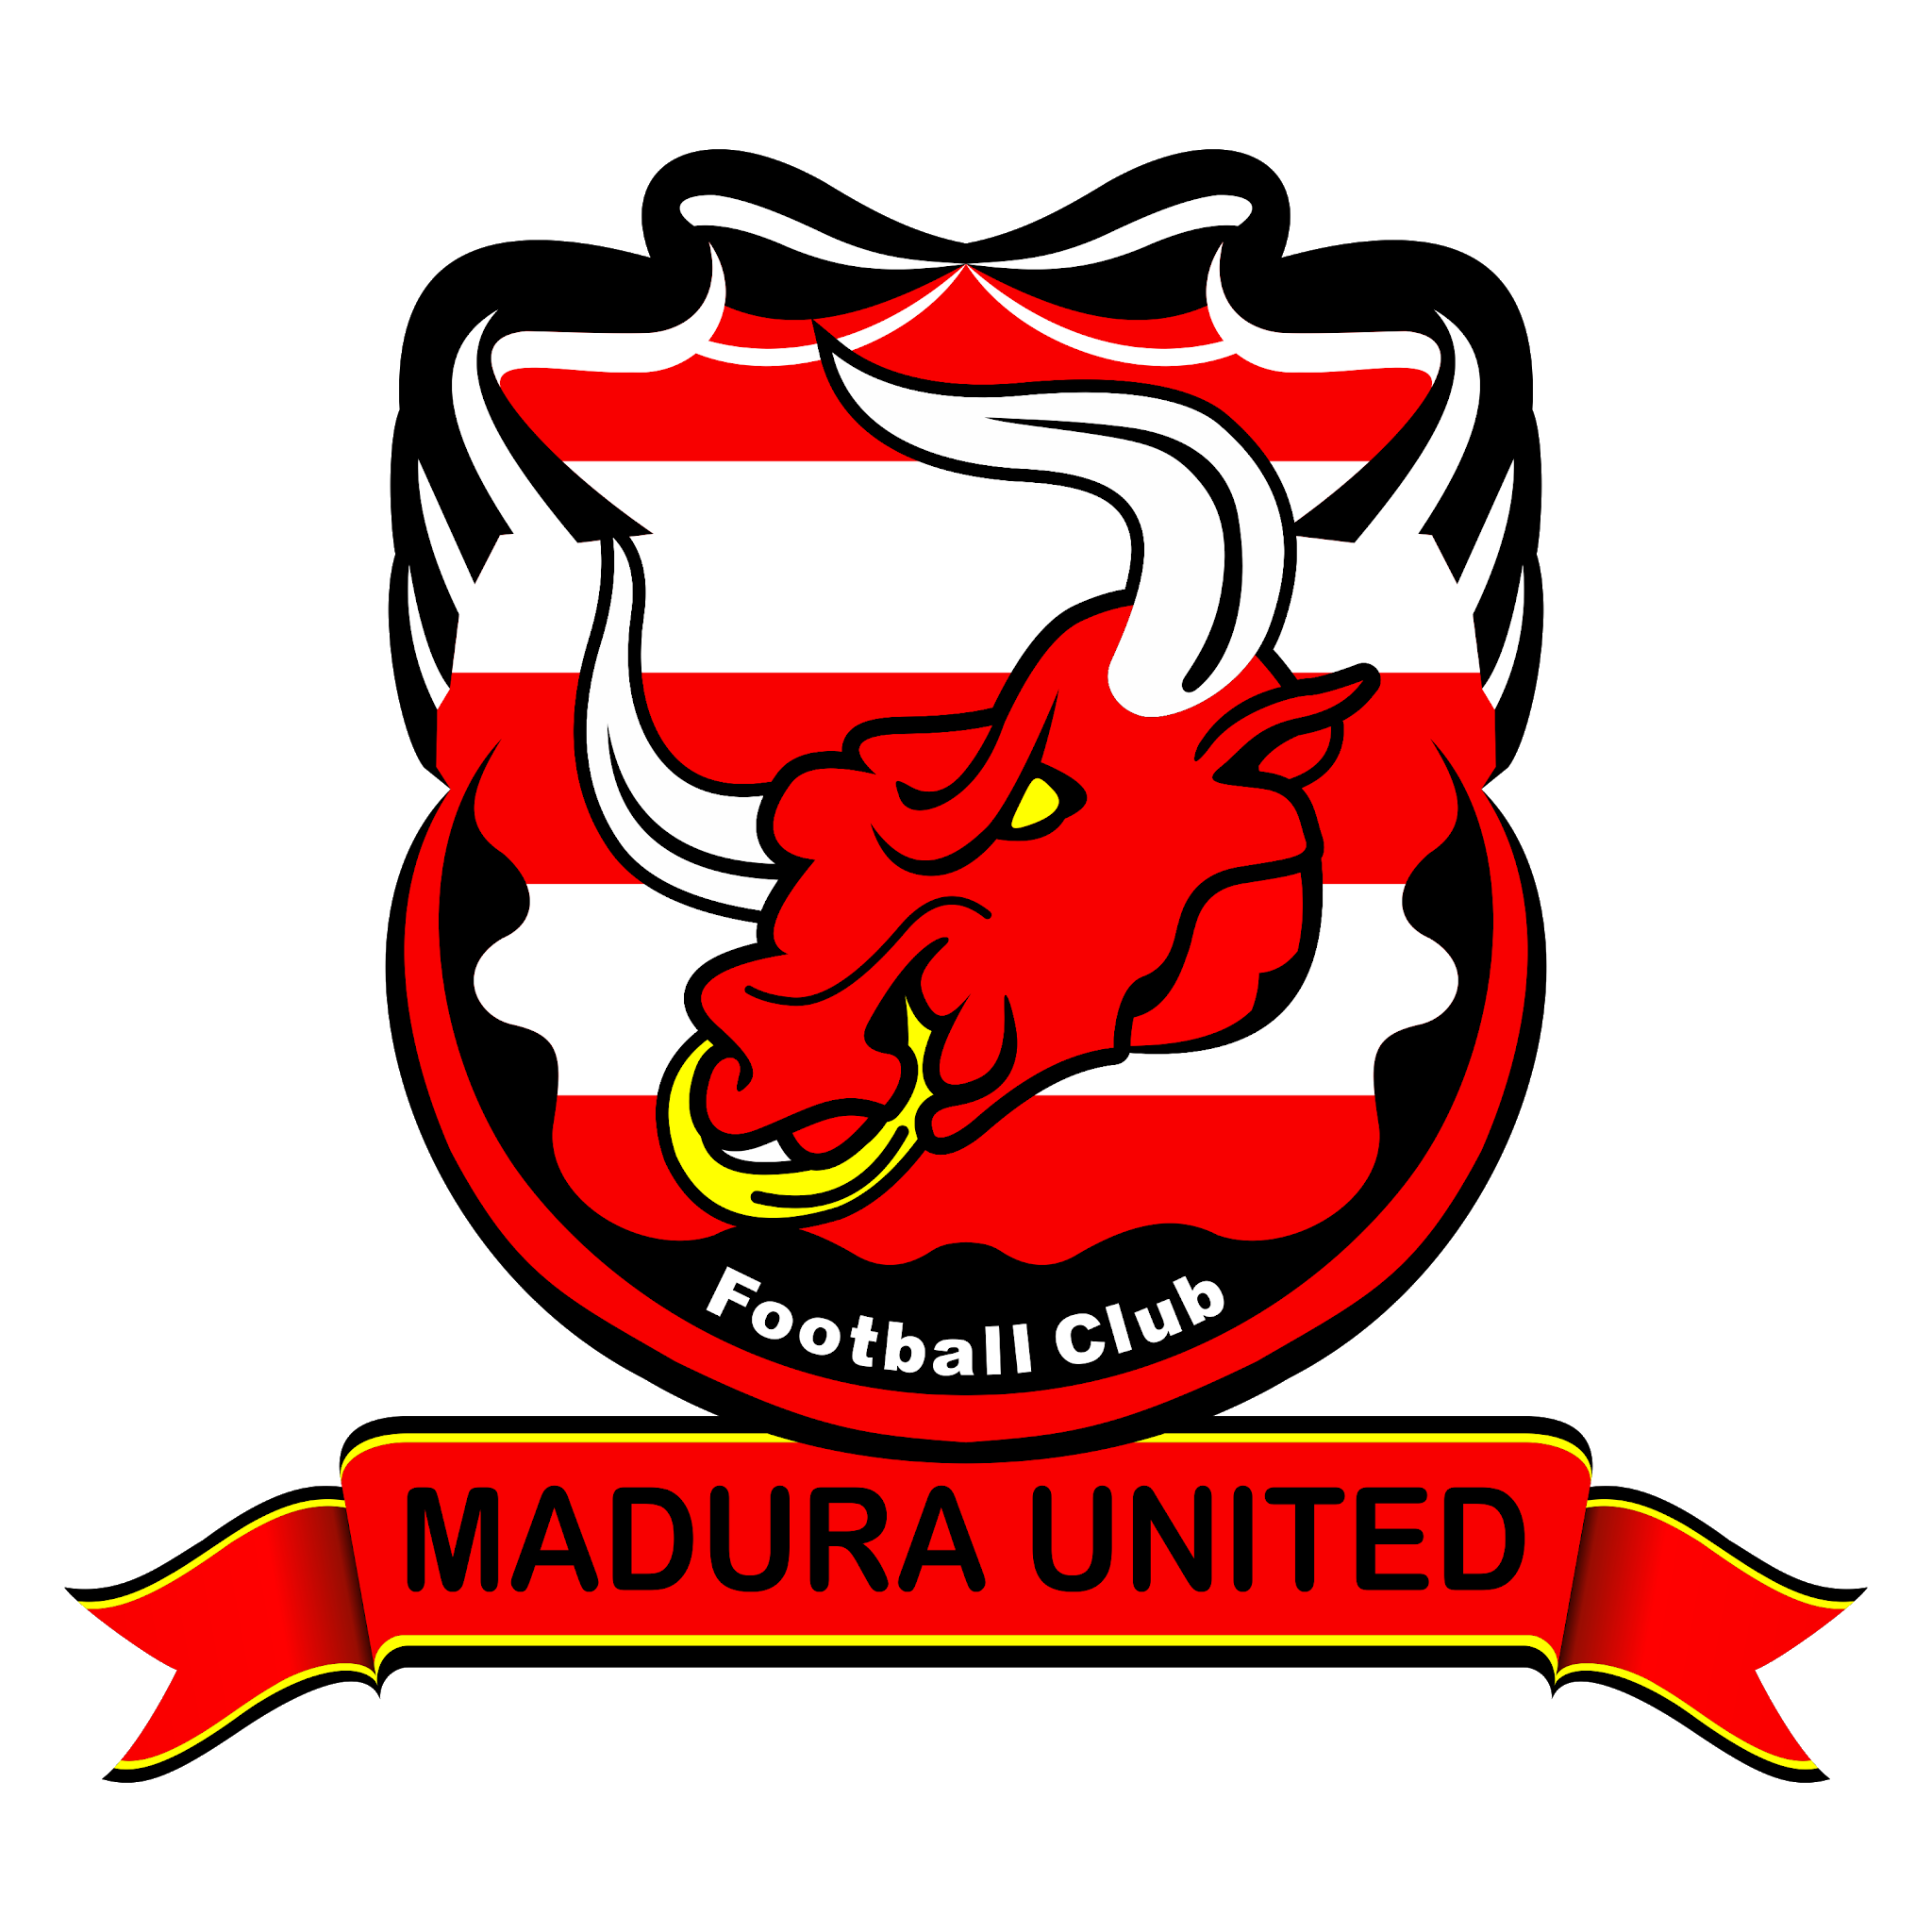 Logo Madura United Format Vektor (CDR, EPS, AI, SVG, PNG)